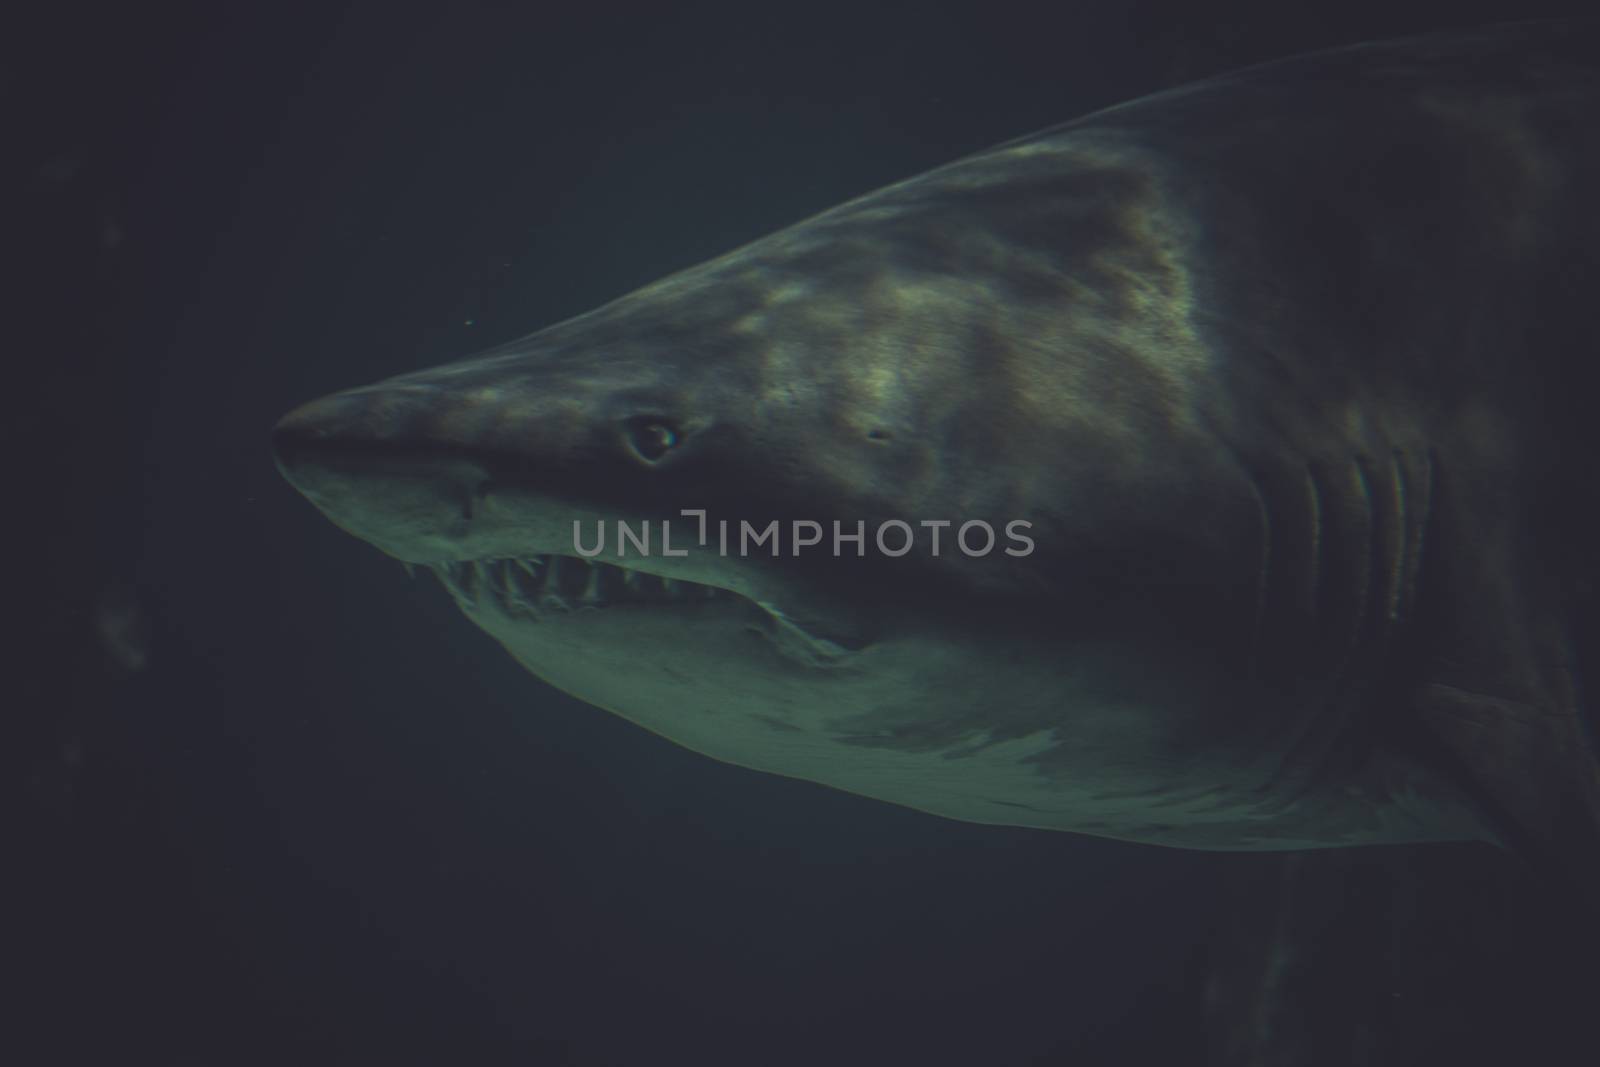 scuba, Great Shark Underwater Photo in the deep blue water. by FernandoCortes